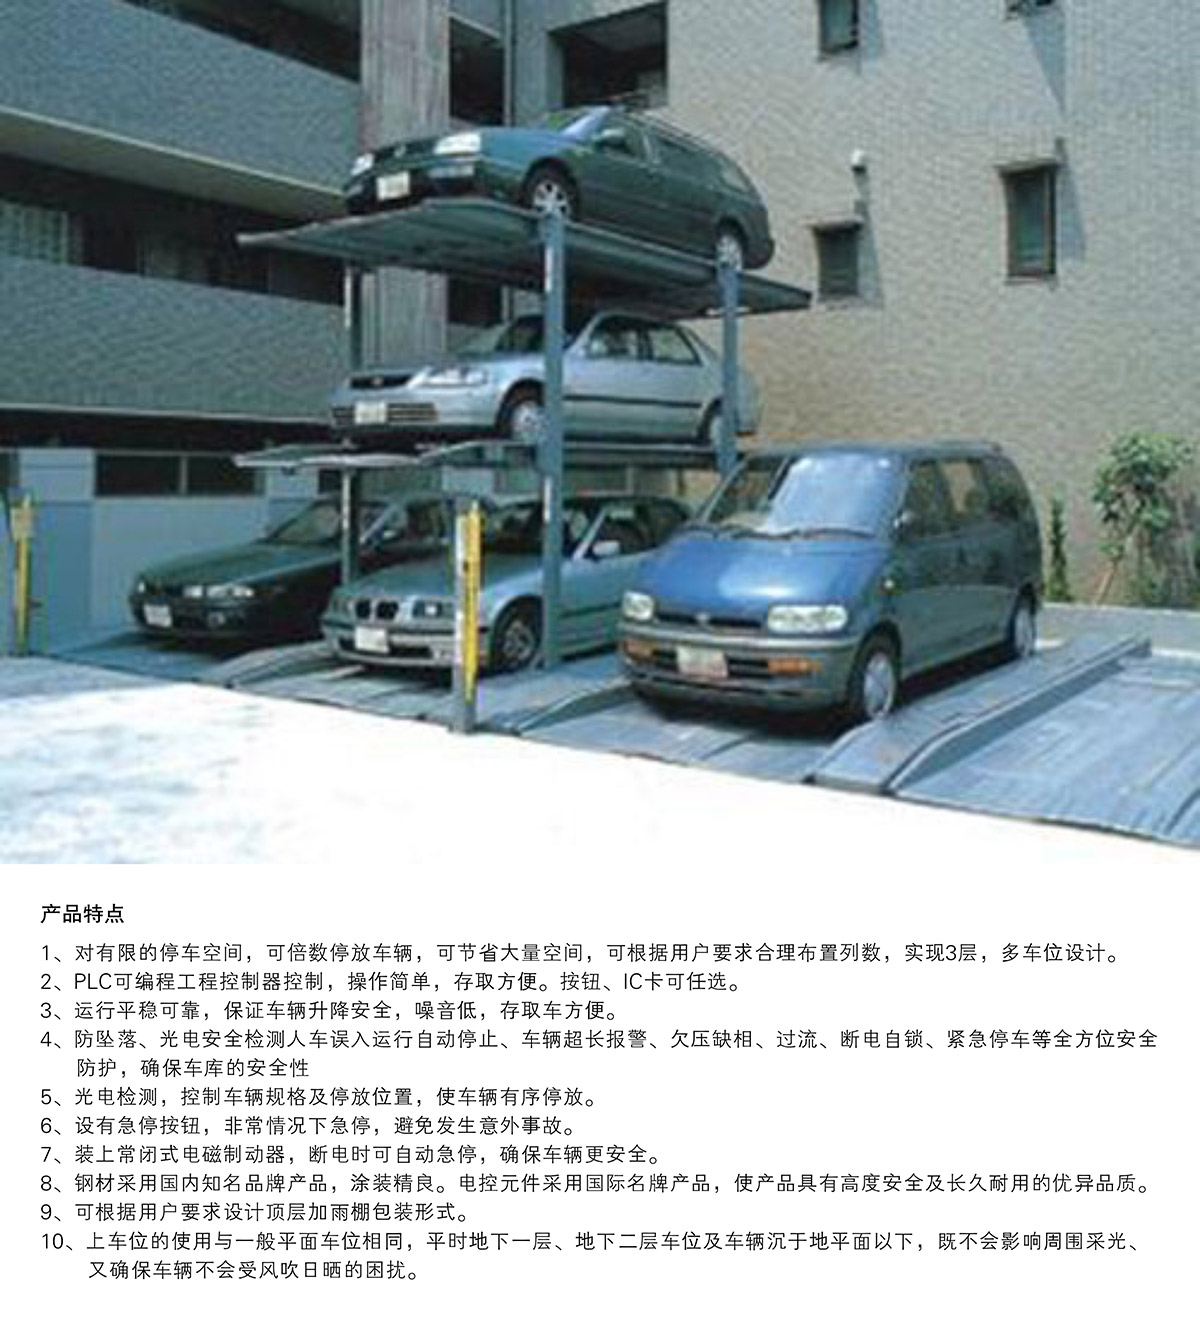 PJS3D2三层地坑简易升降停车设备产品特点.jpg